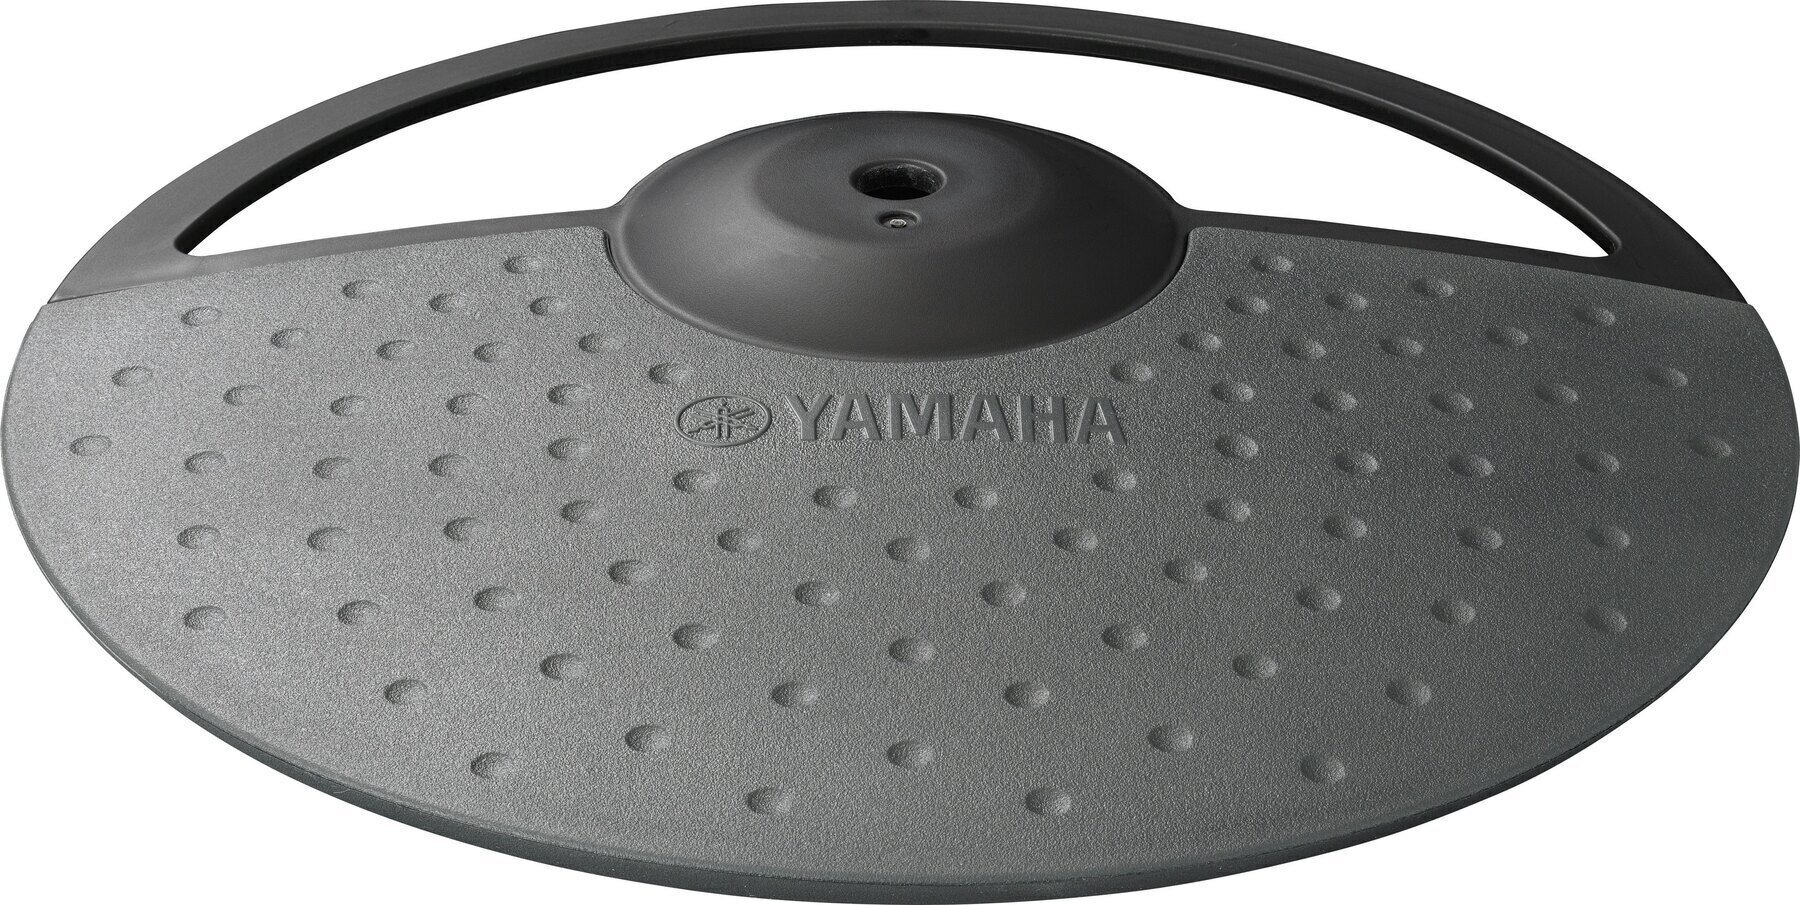 Pad do perkusji elektronicznej Yamaha PCY 90 Cymbal pad